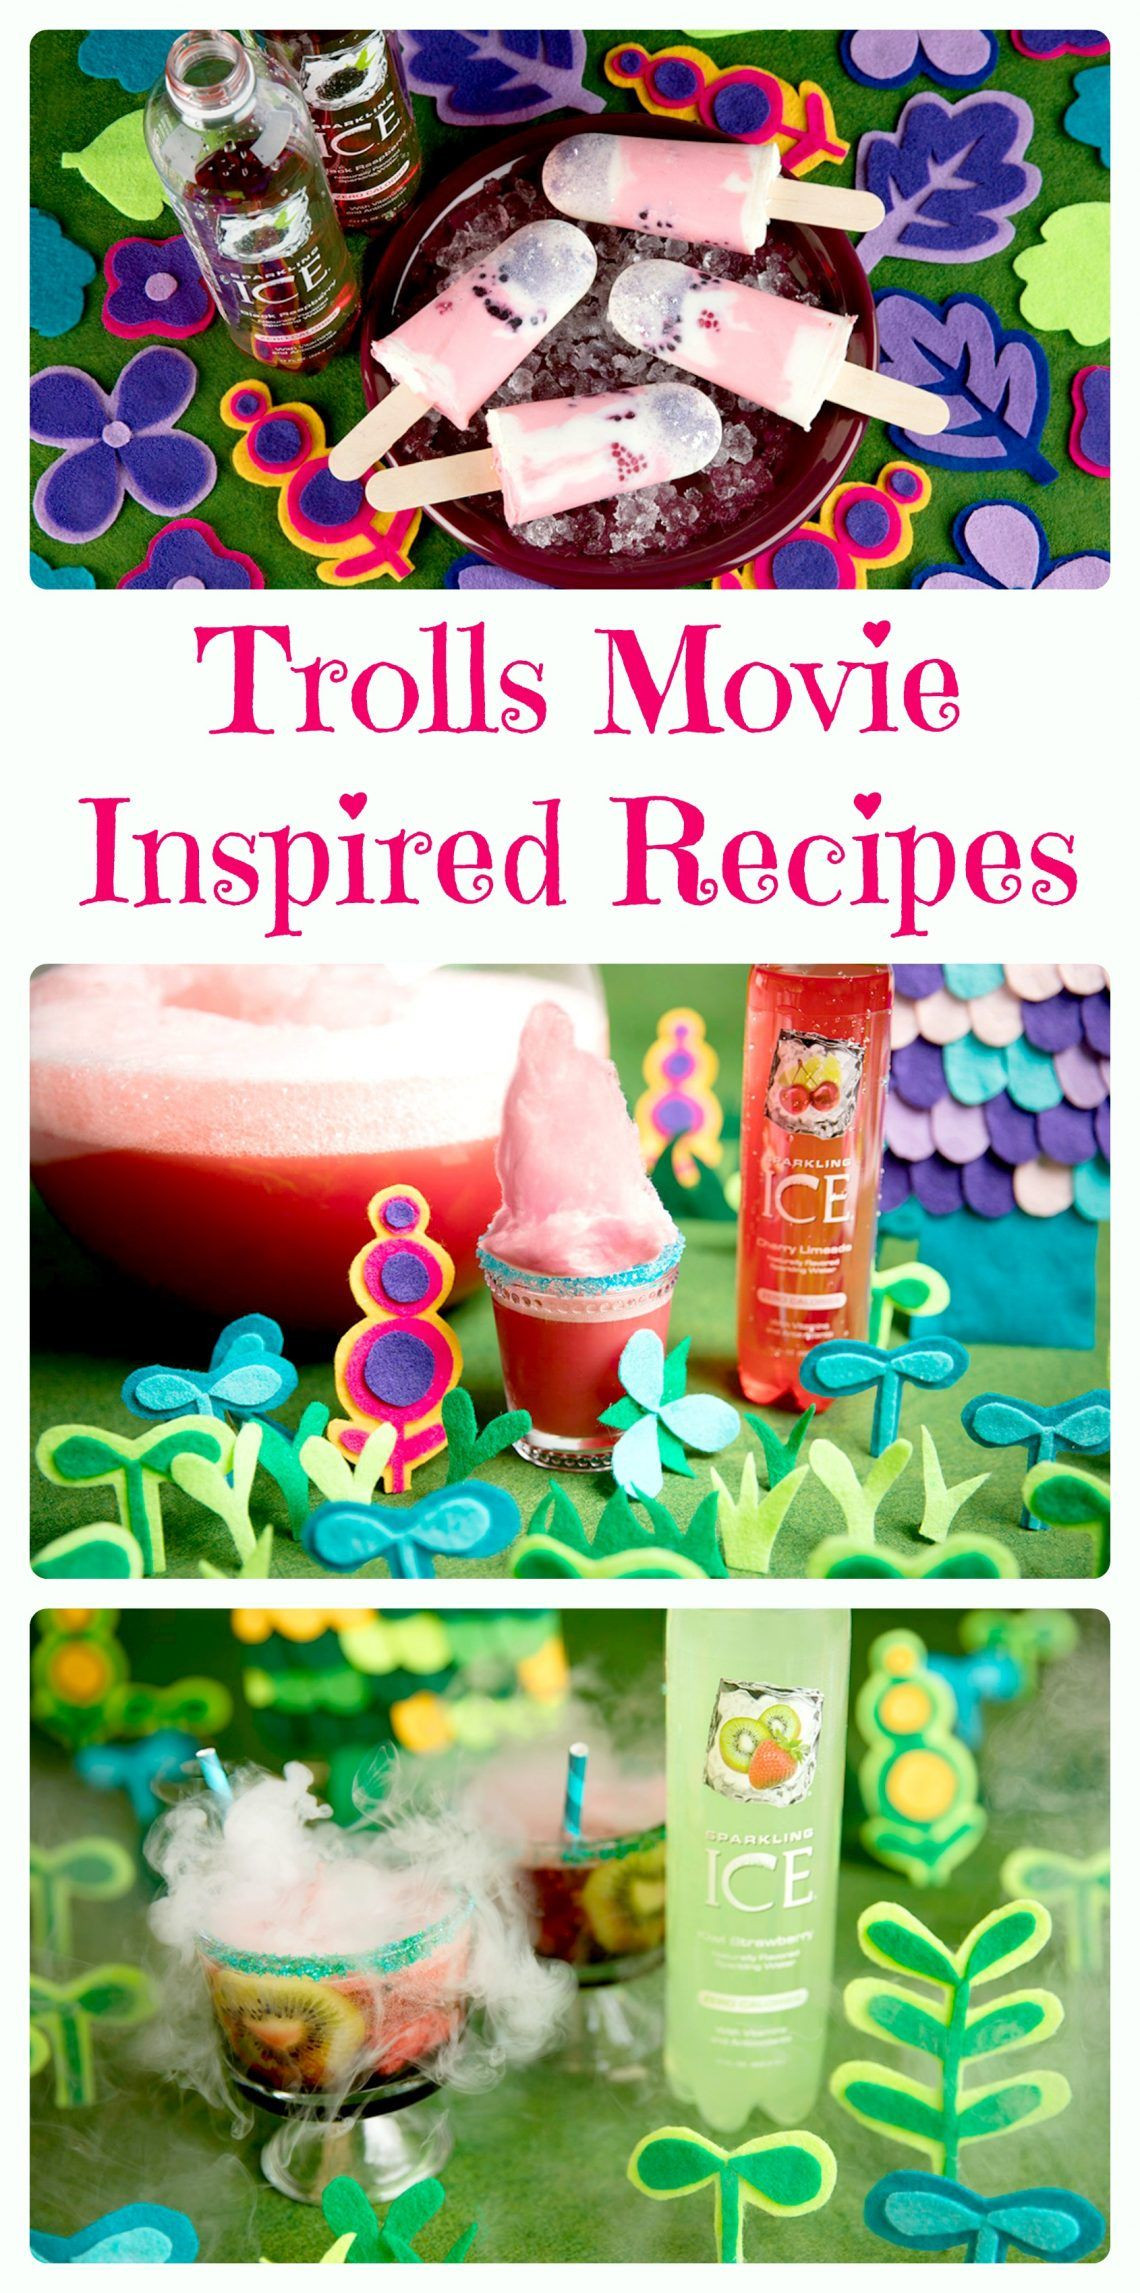 Dreamworks Trolls Party Ideas
 DreamWorks Trolls Movie Inspired Recipes Fun Trolls party